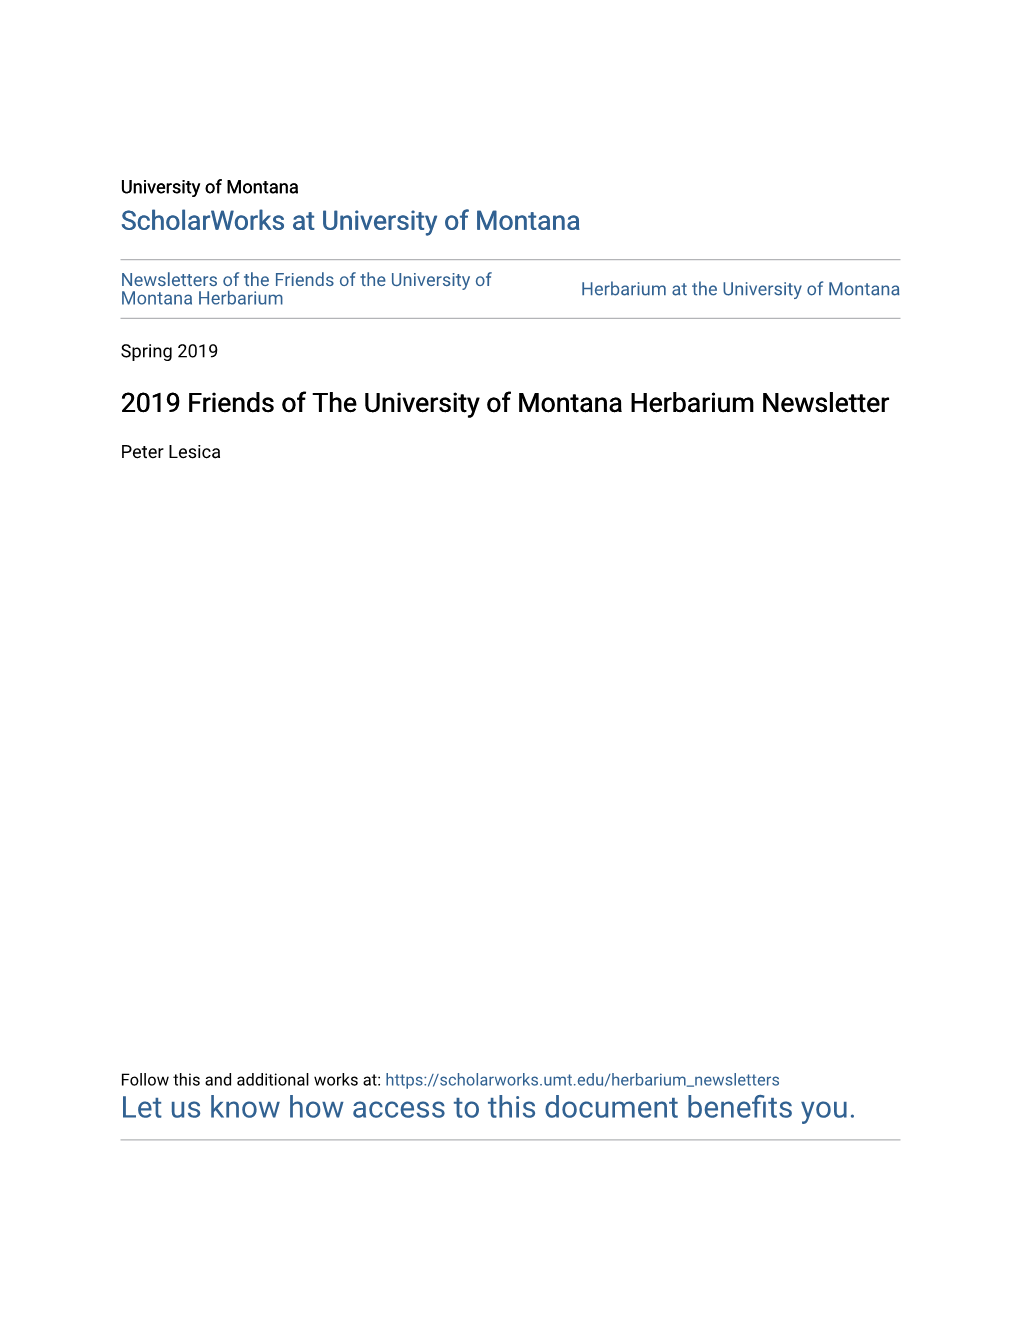 2019 Friends of the University of Montana Herbarium Newsletter